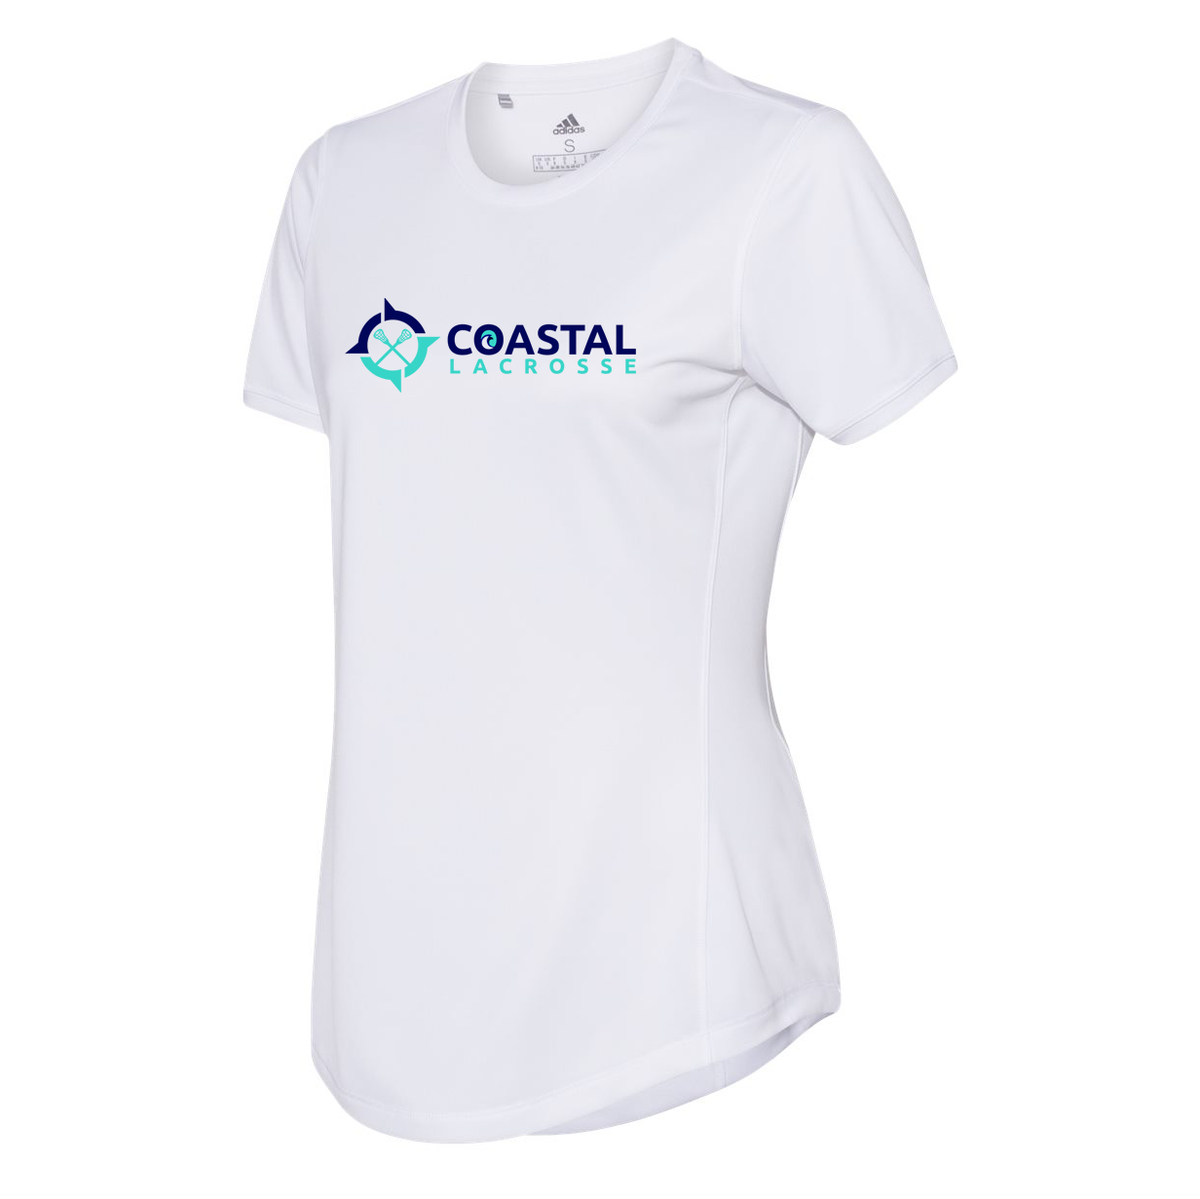 Coastal Lacrosse Women's Adidas Sport T-Shirt